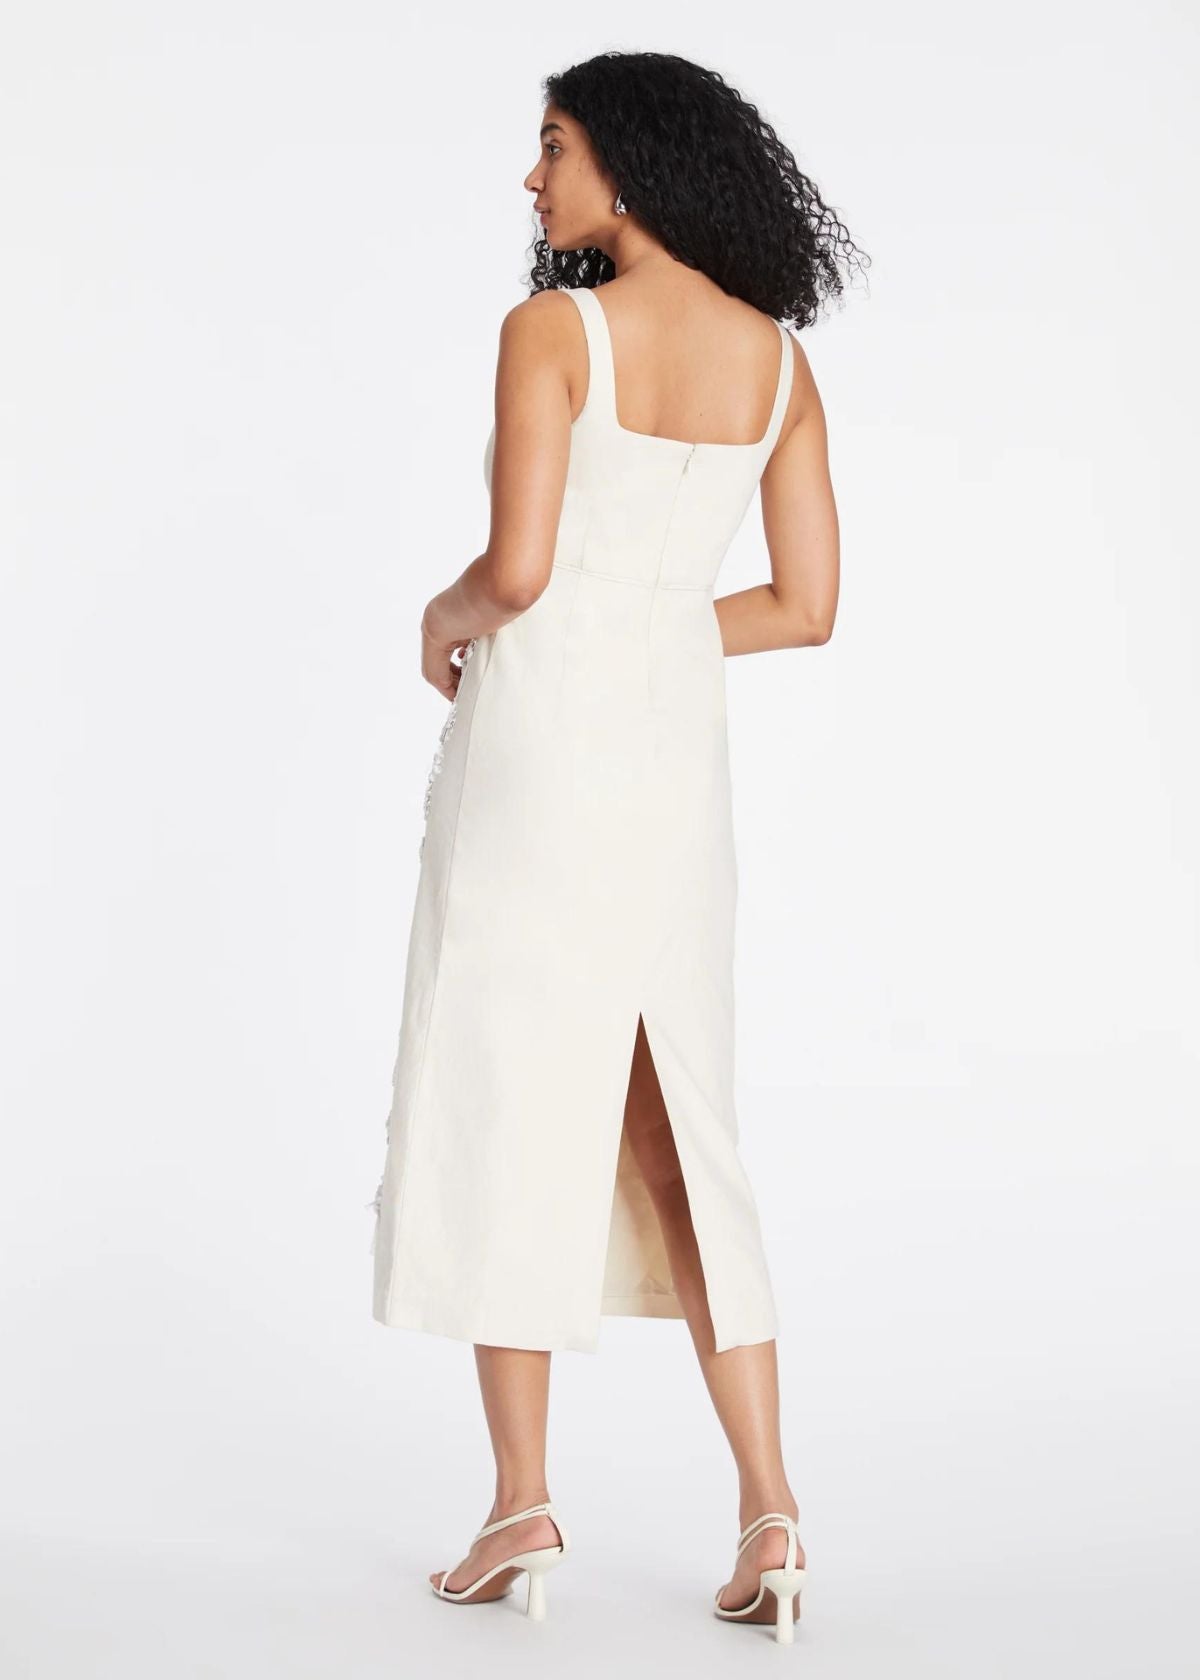 TANYA TAYLOR Merritt Dress - Cream/White